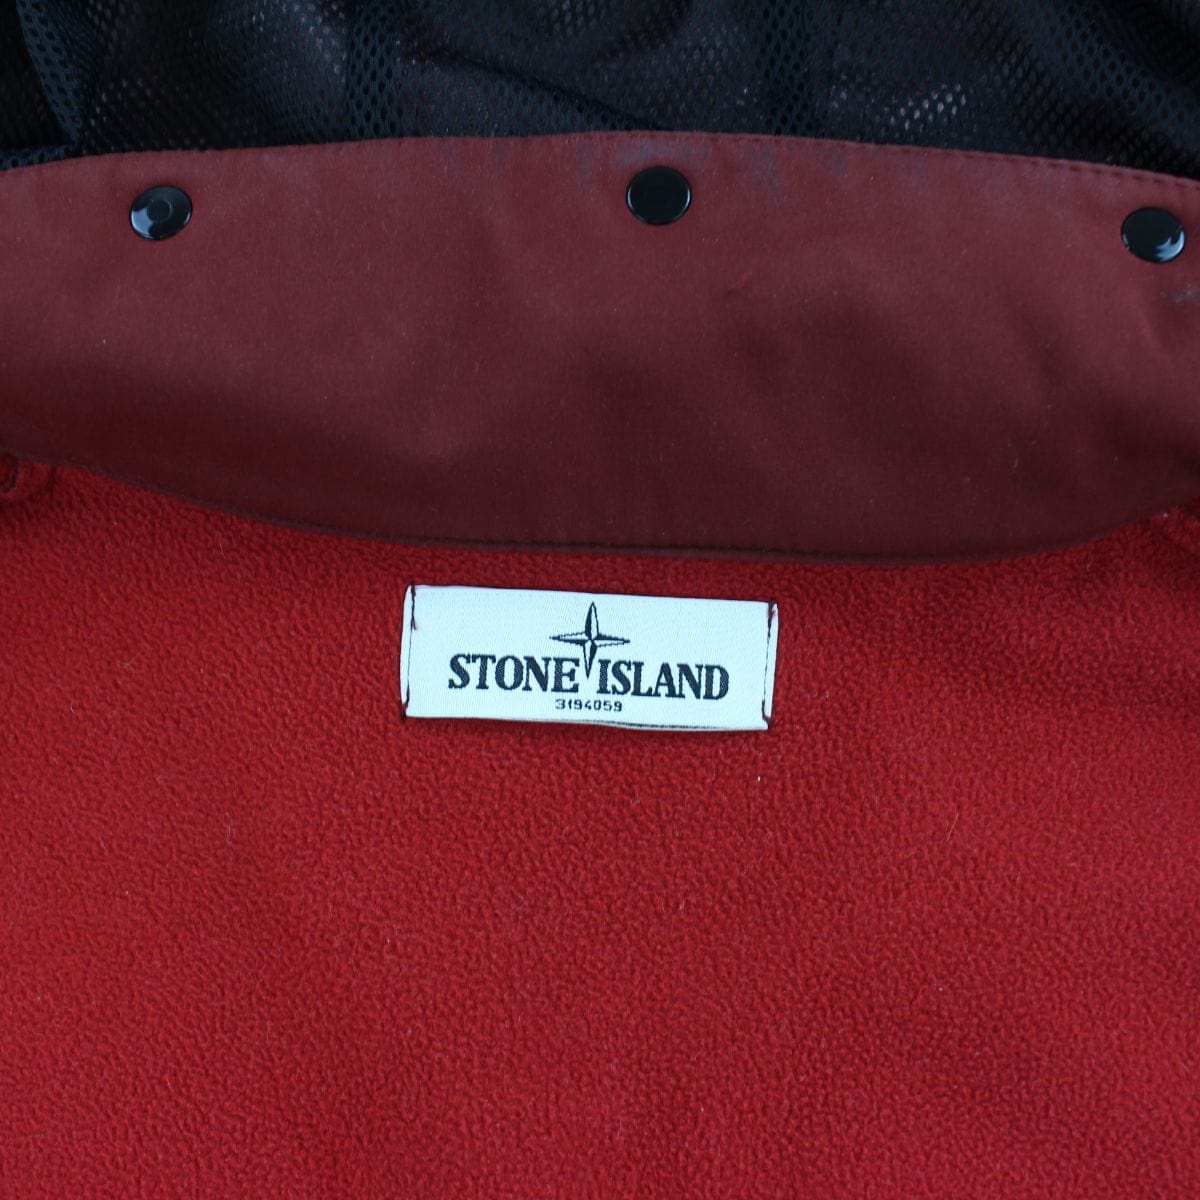 Stone Island AW 2011 fleece lined Jacket Burgundy - SaruGeneral